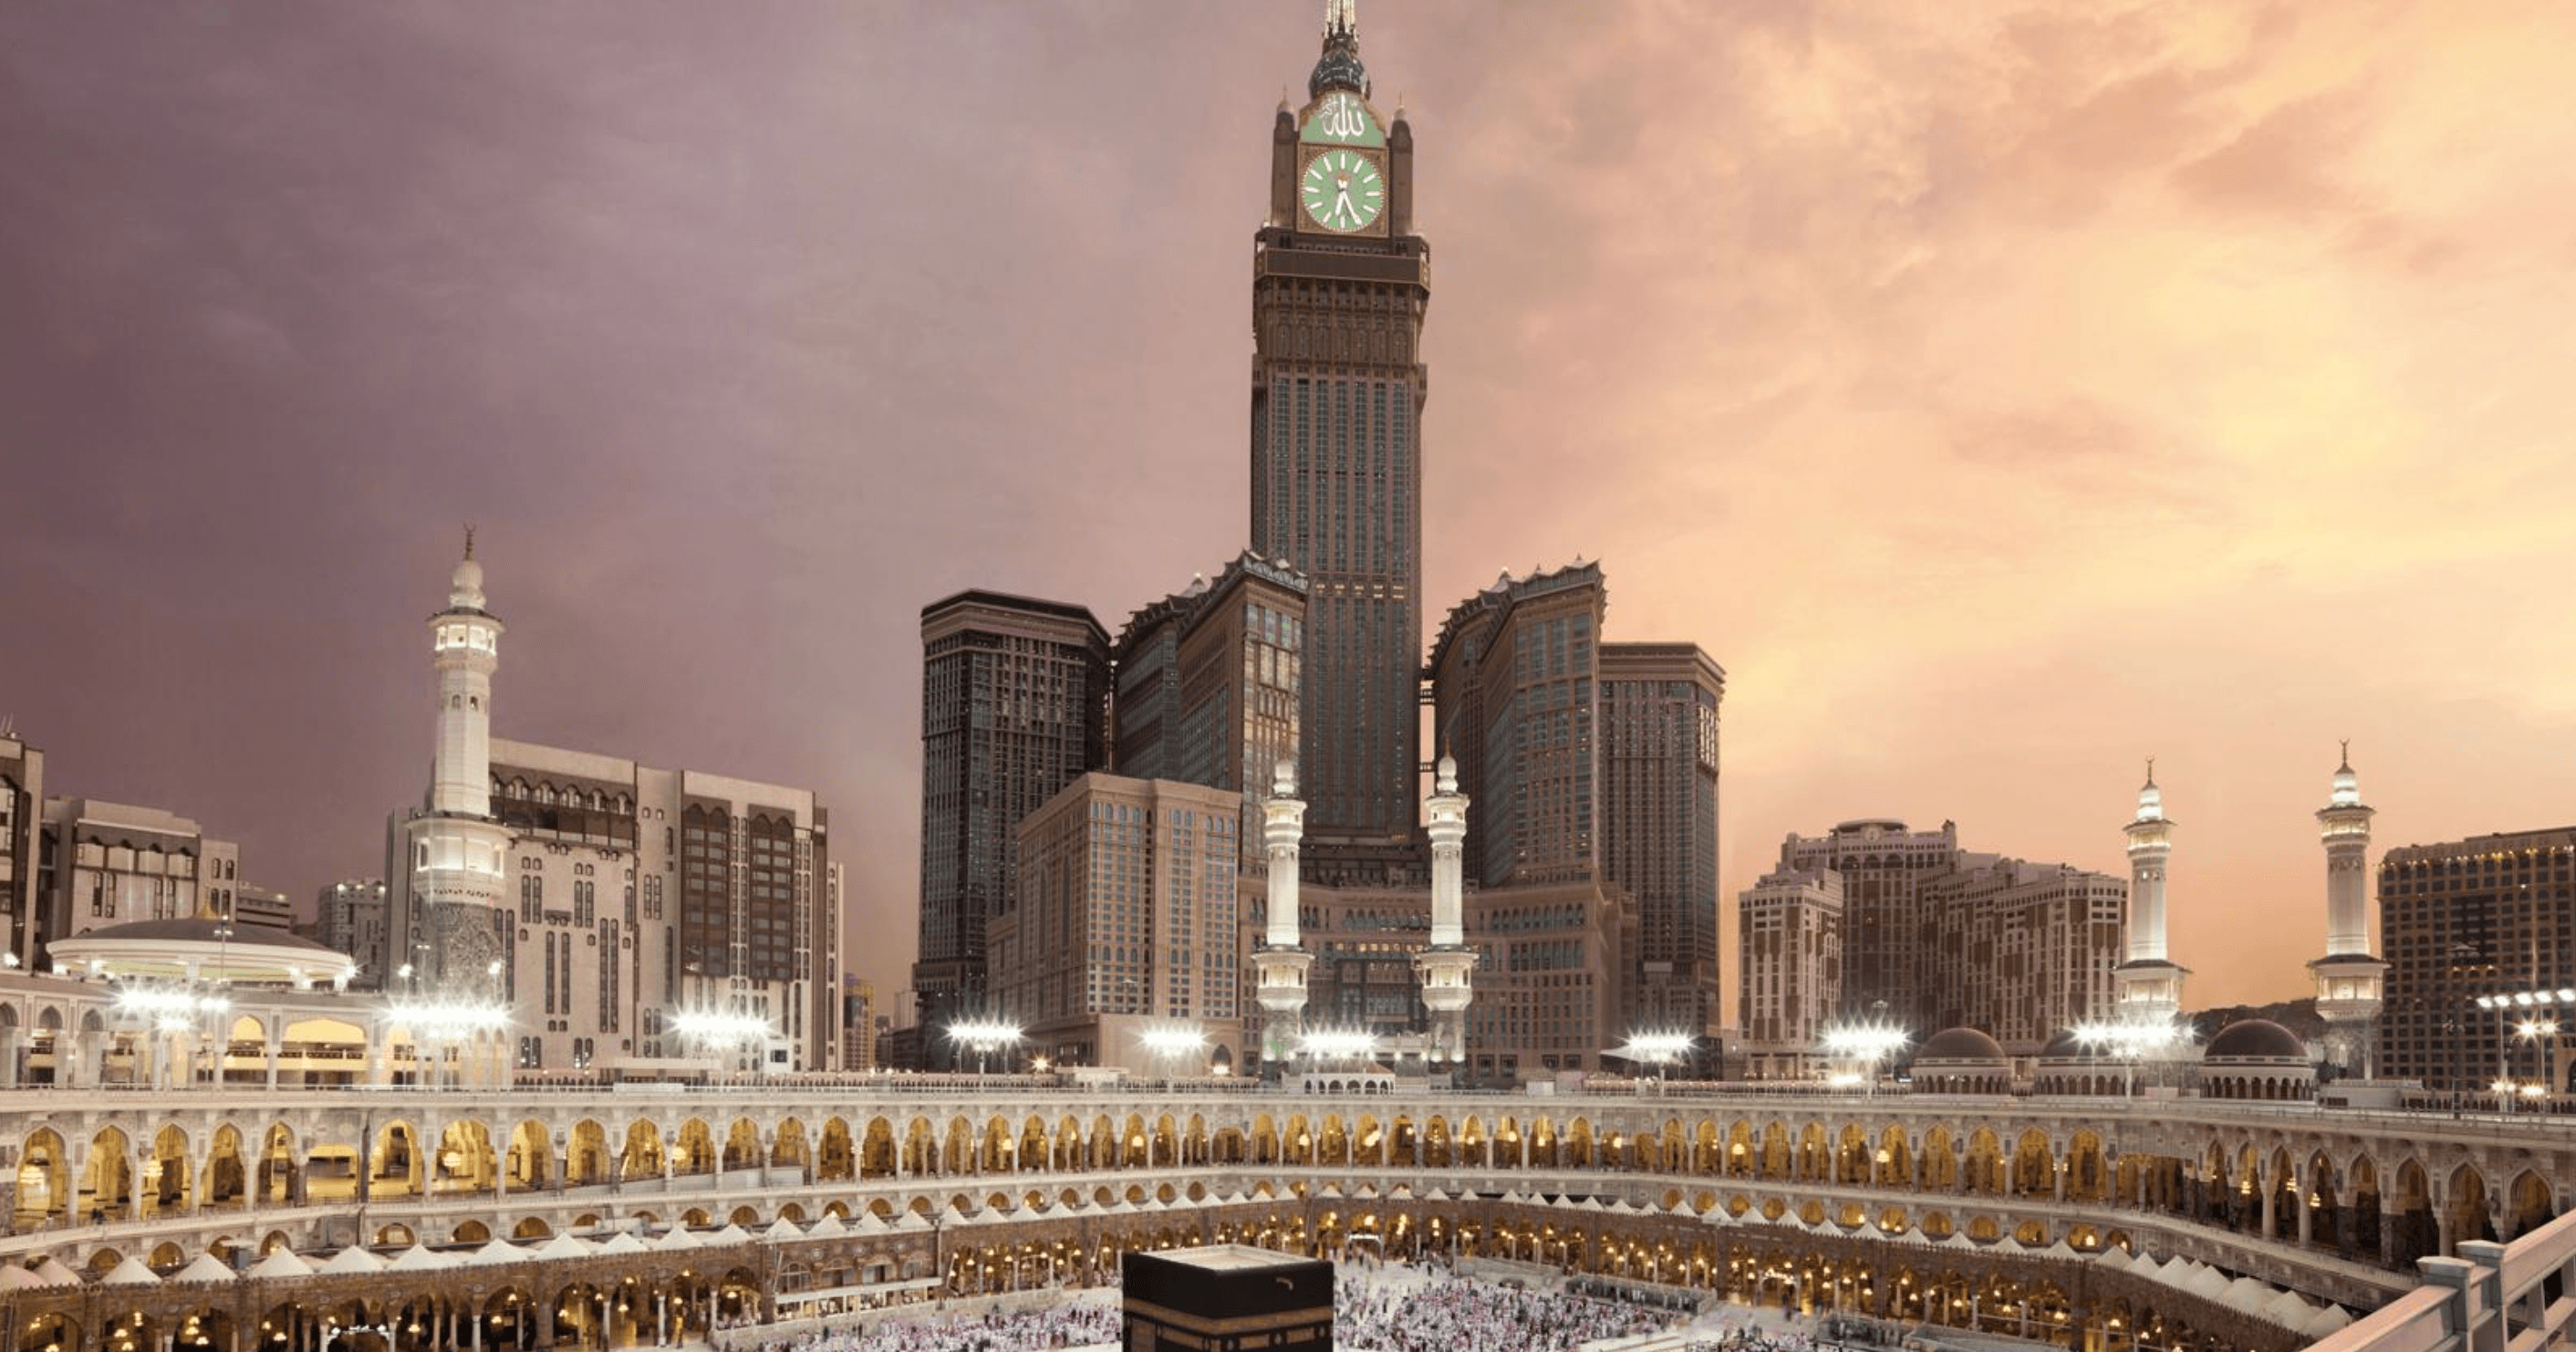 Masjid Al Haraam and Swissotel Makkah